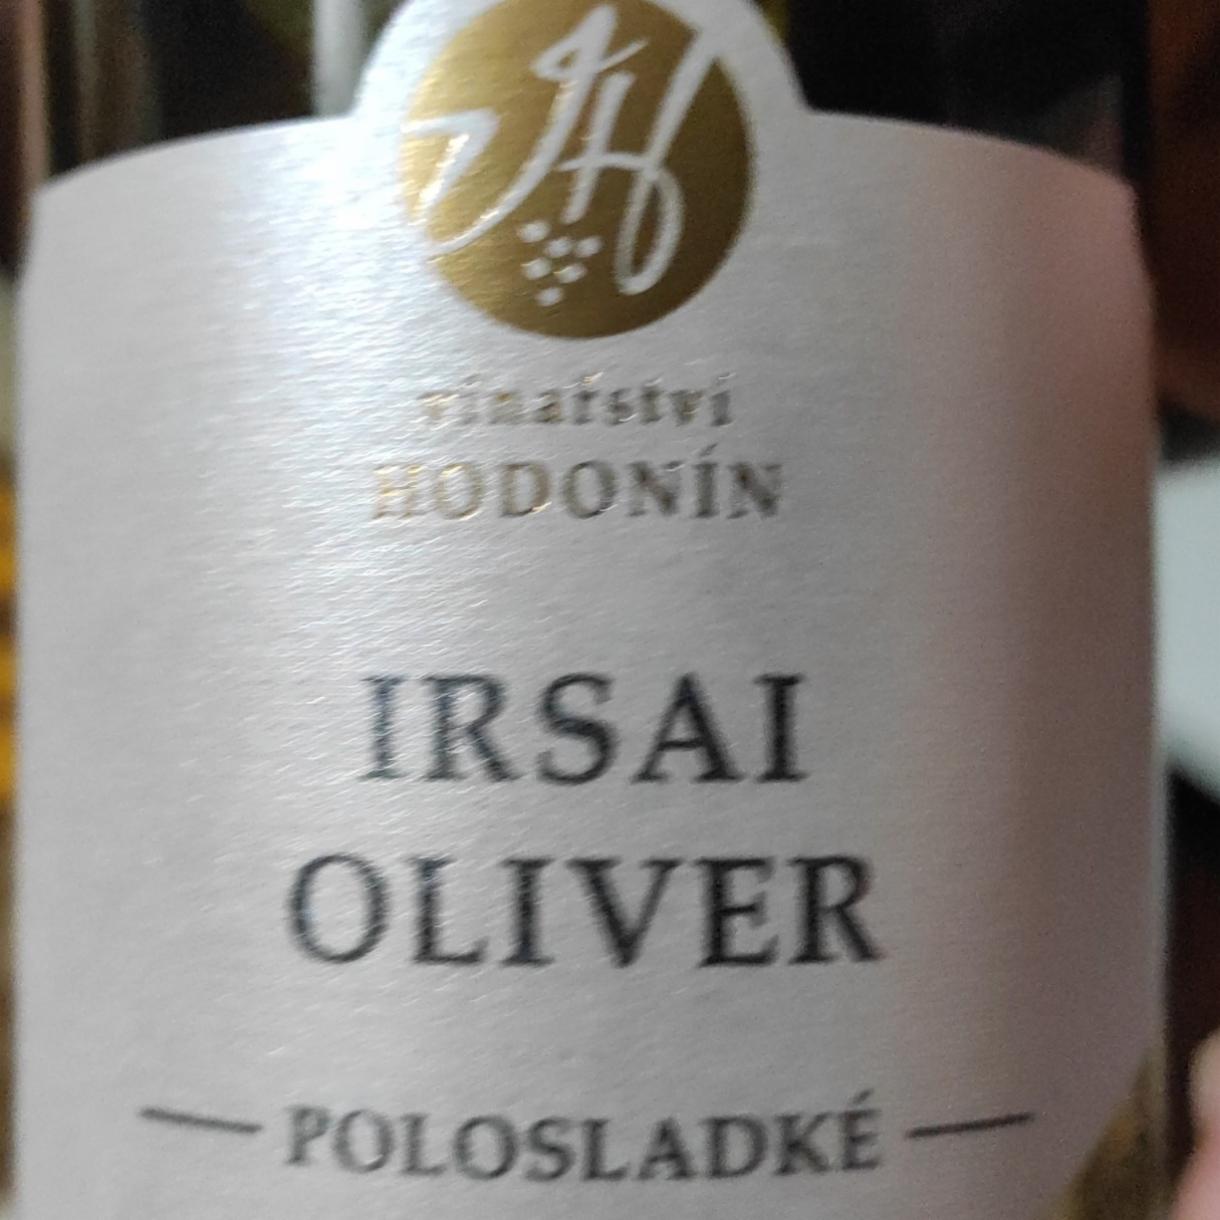 Fotografie - Bílé víno Irsai Oliver polosladké Vinařství Hodonín